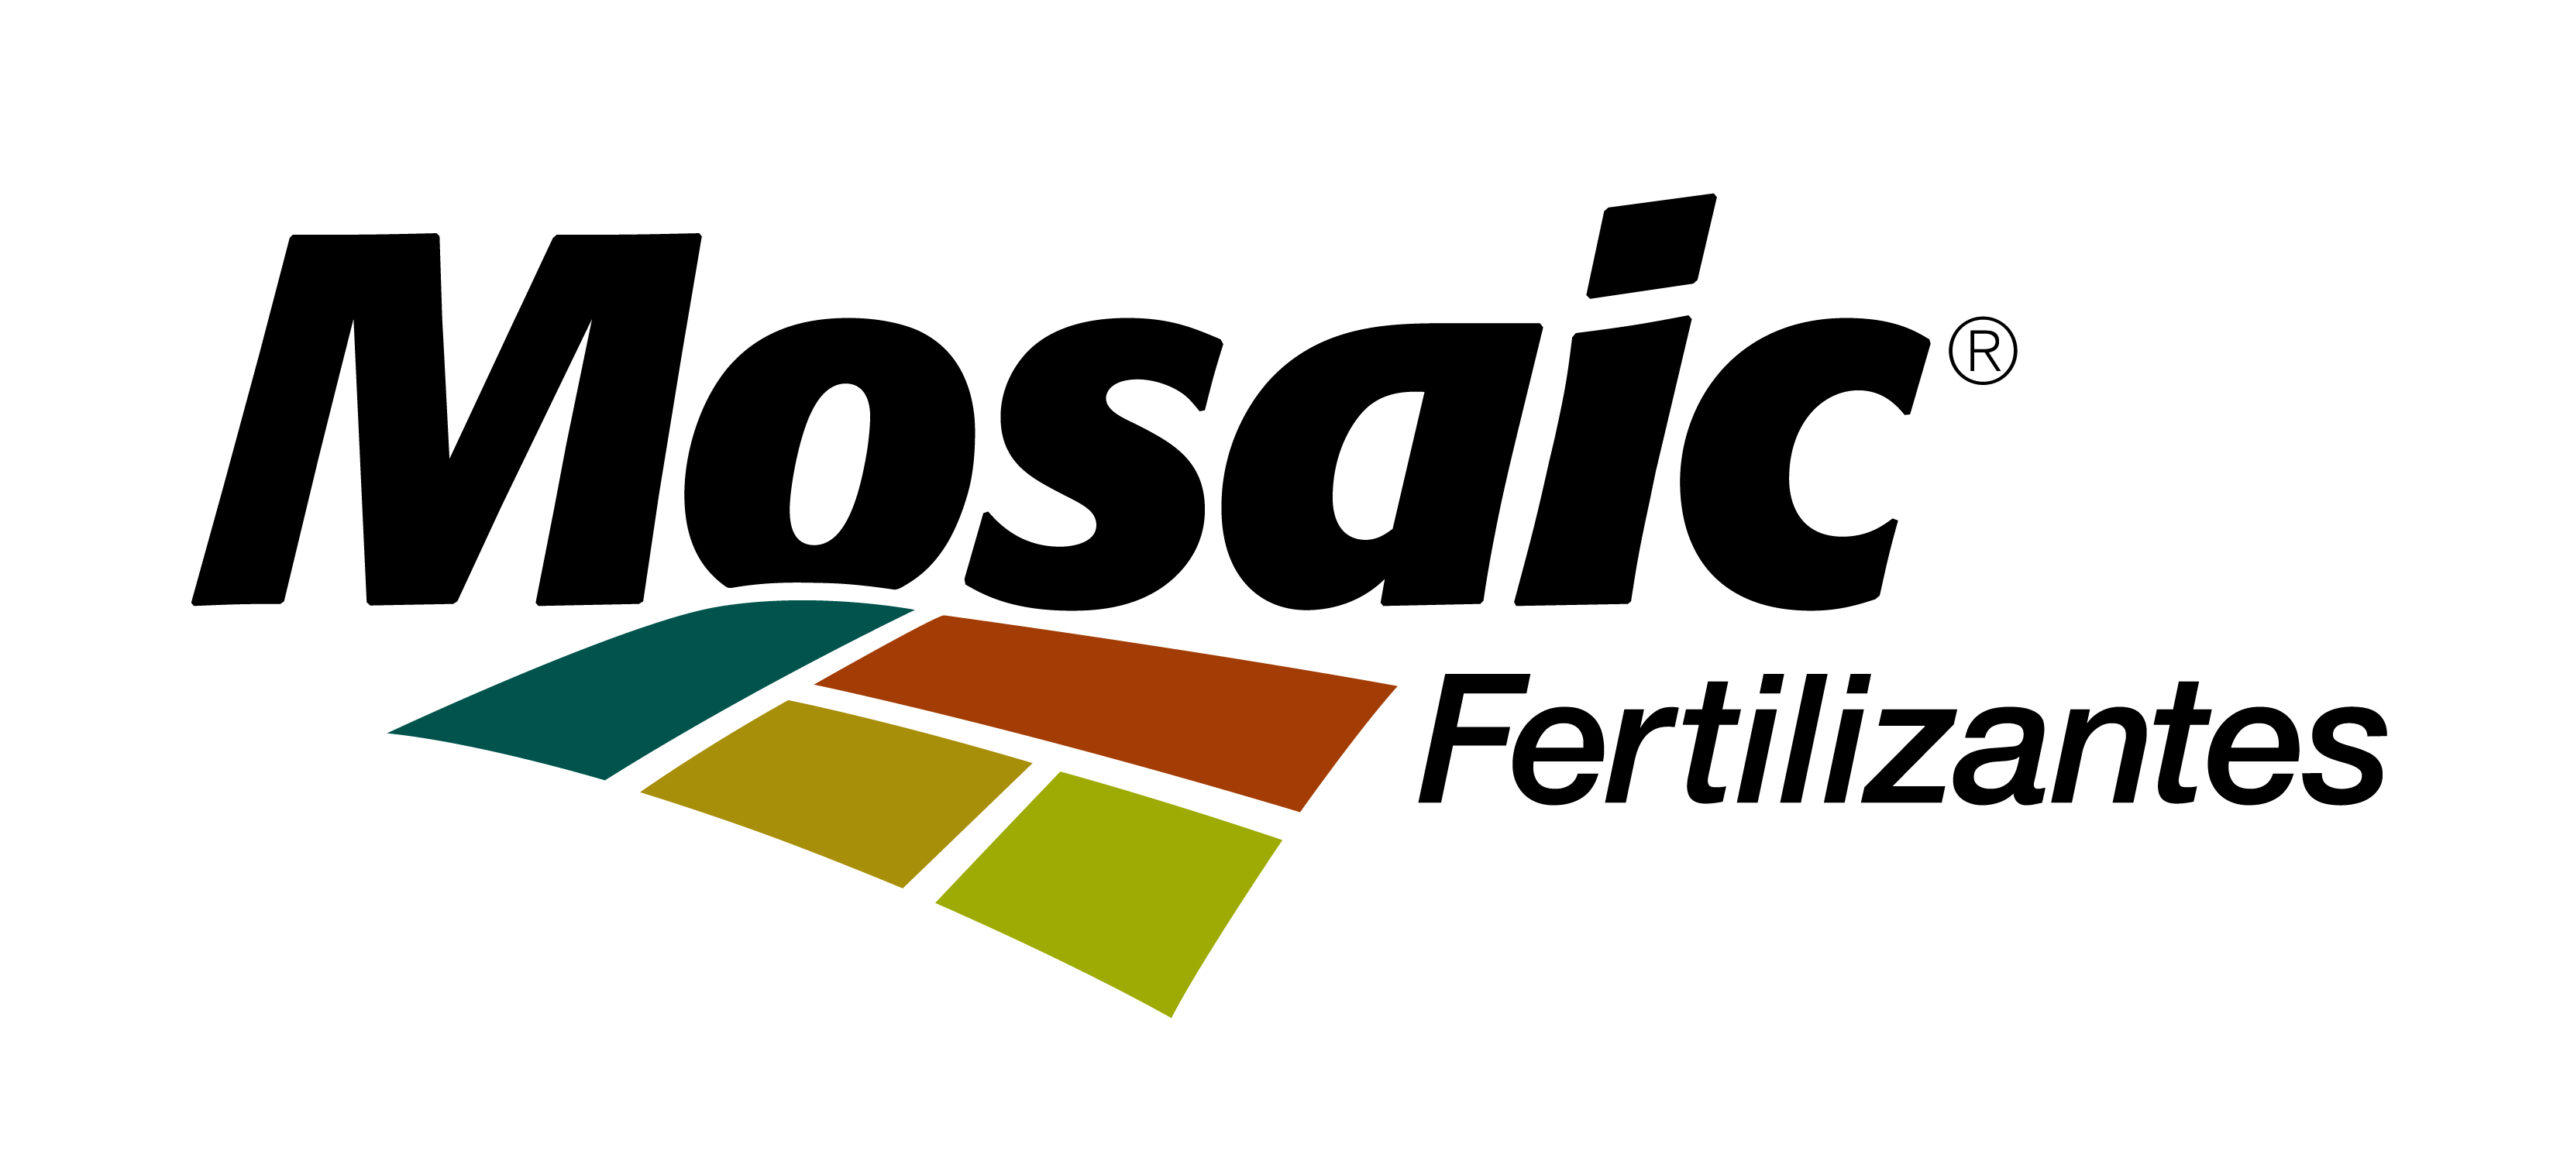 Mosaic_Fertilizantes_blk_5c_rgb_large